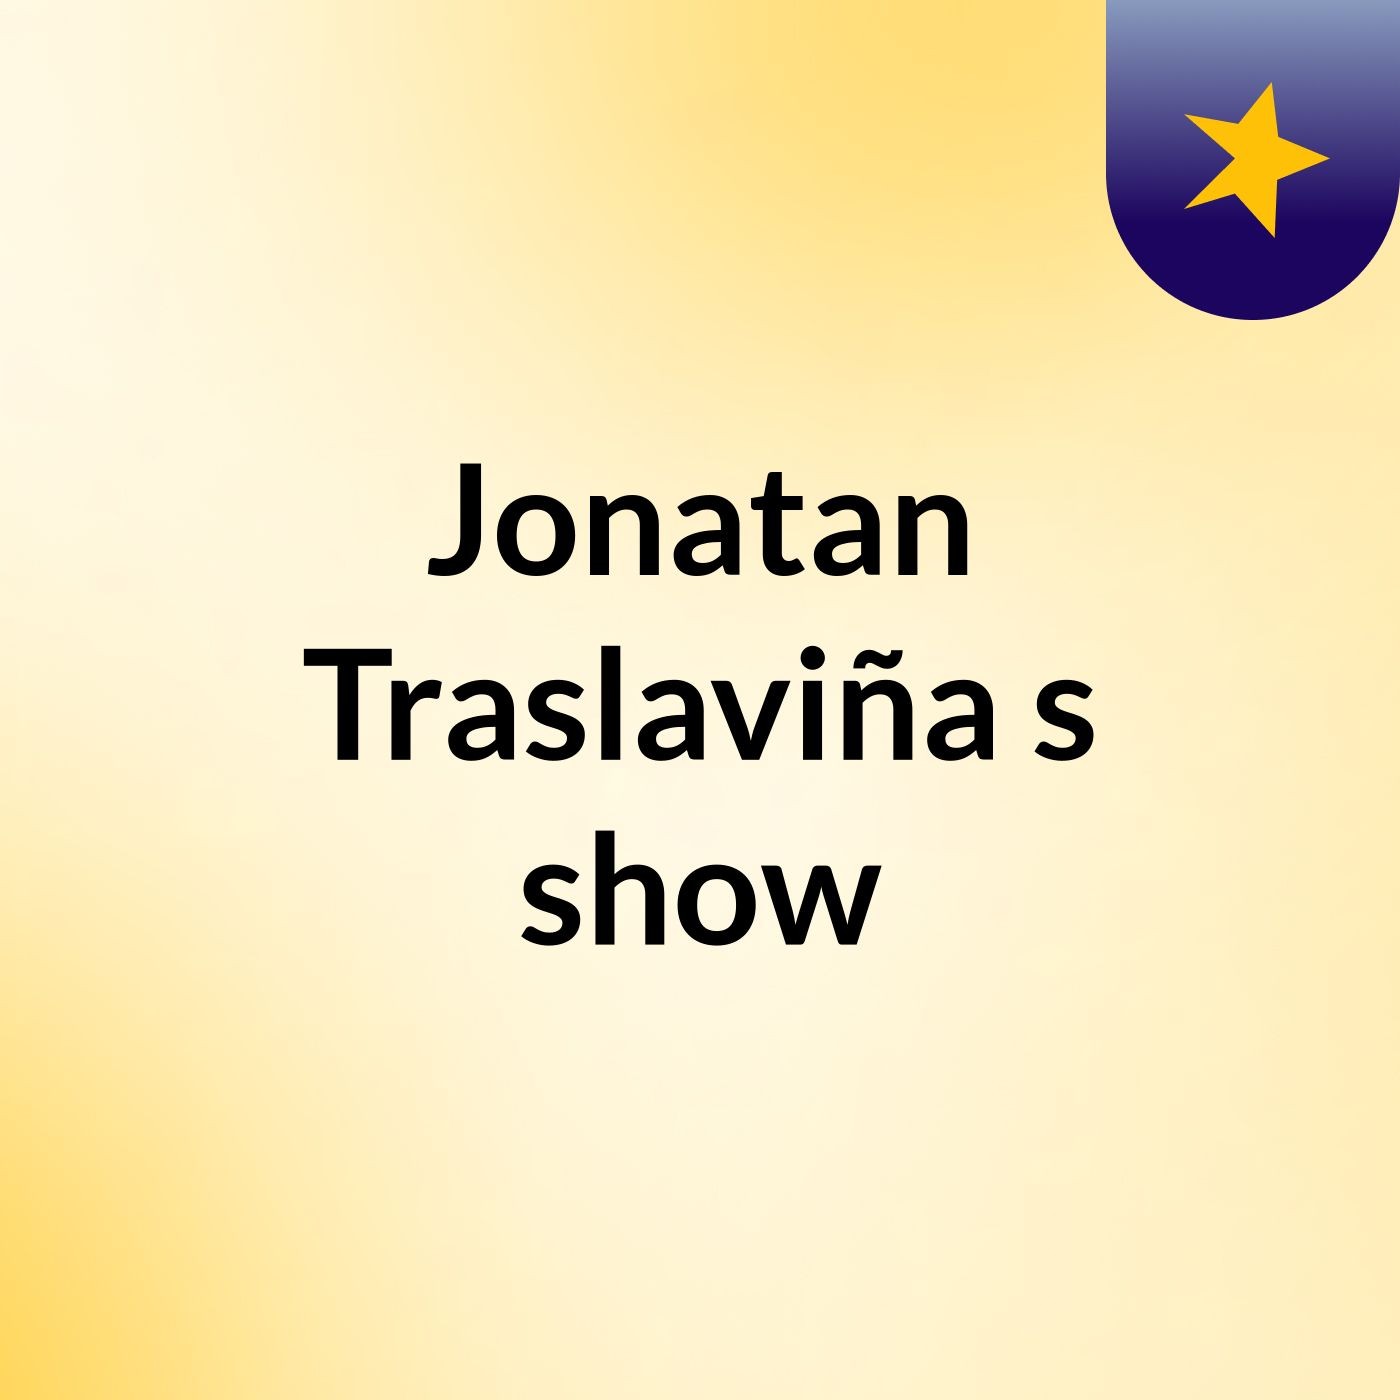 Jonatan Traslaviña's show